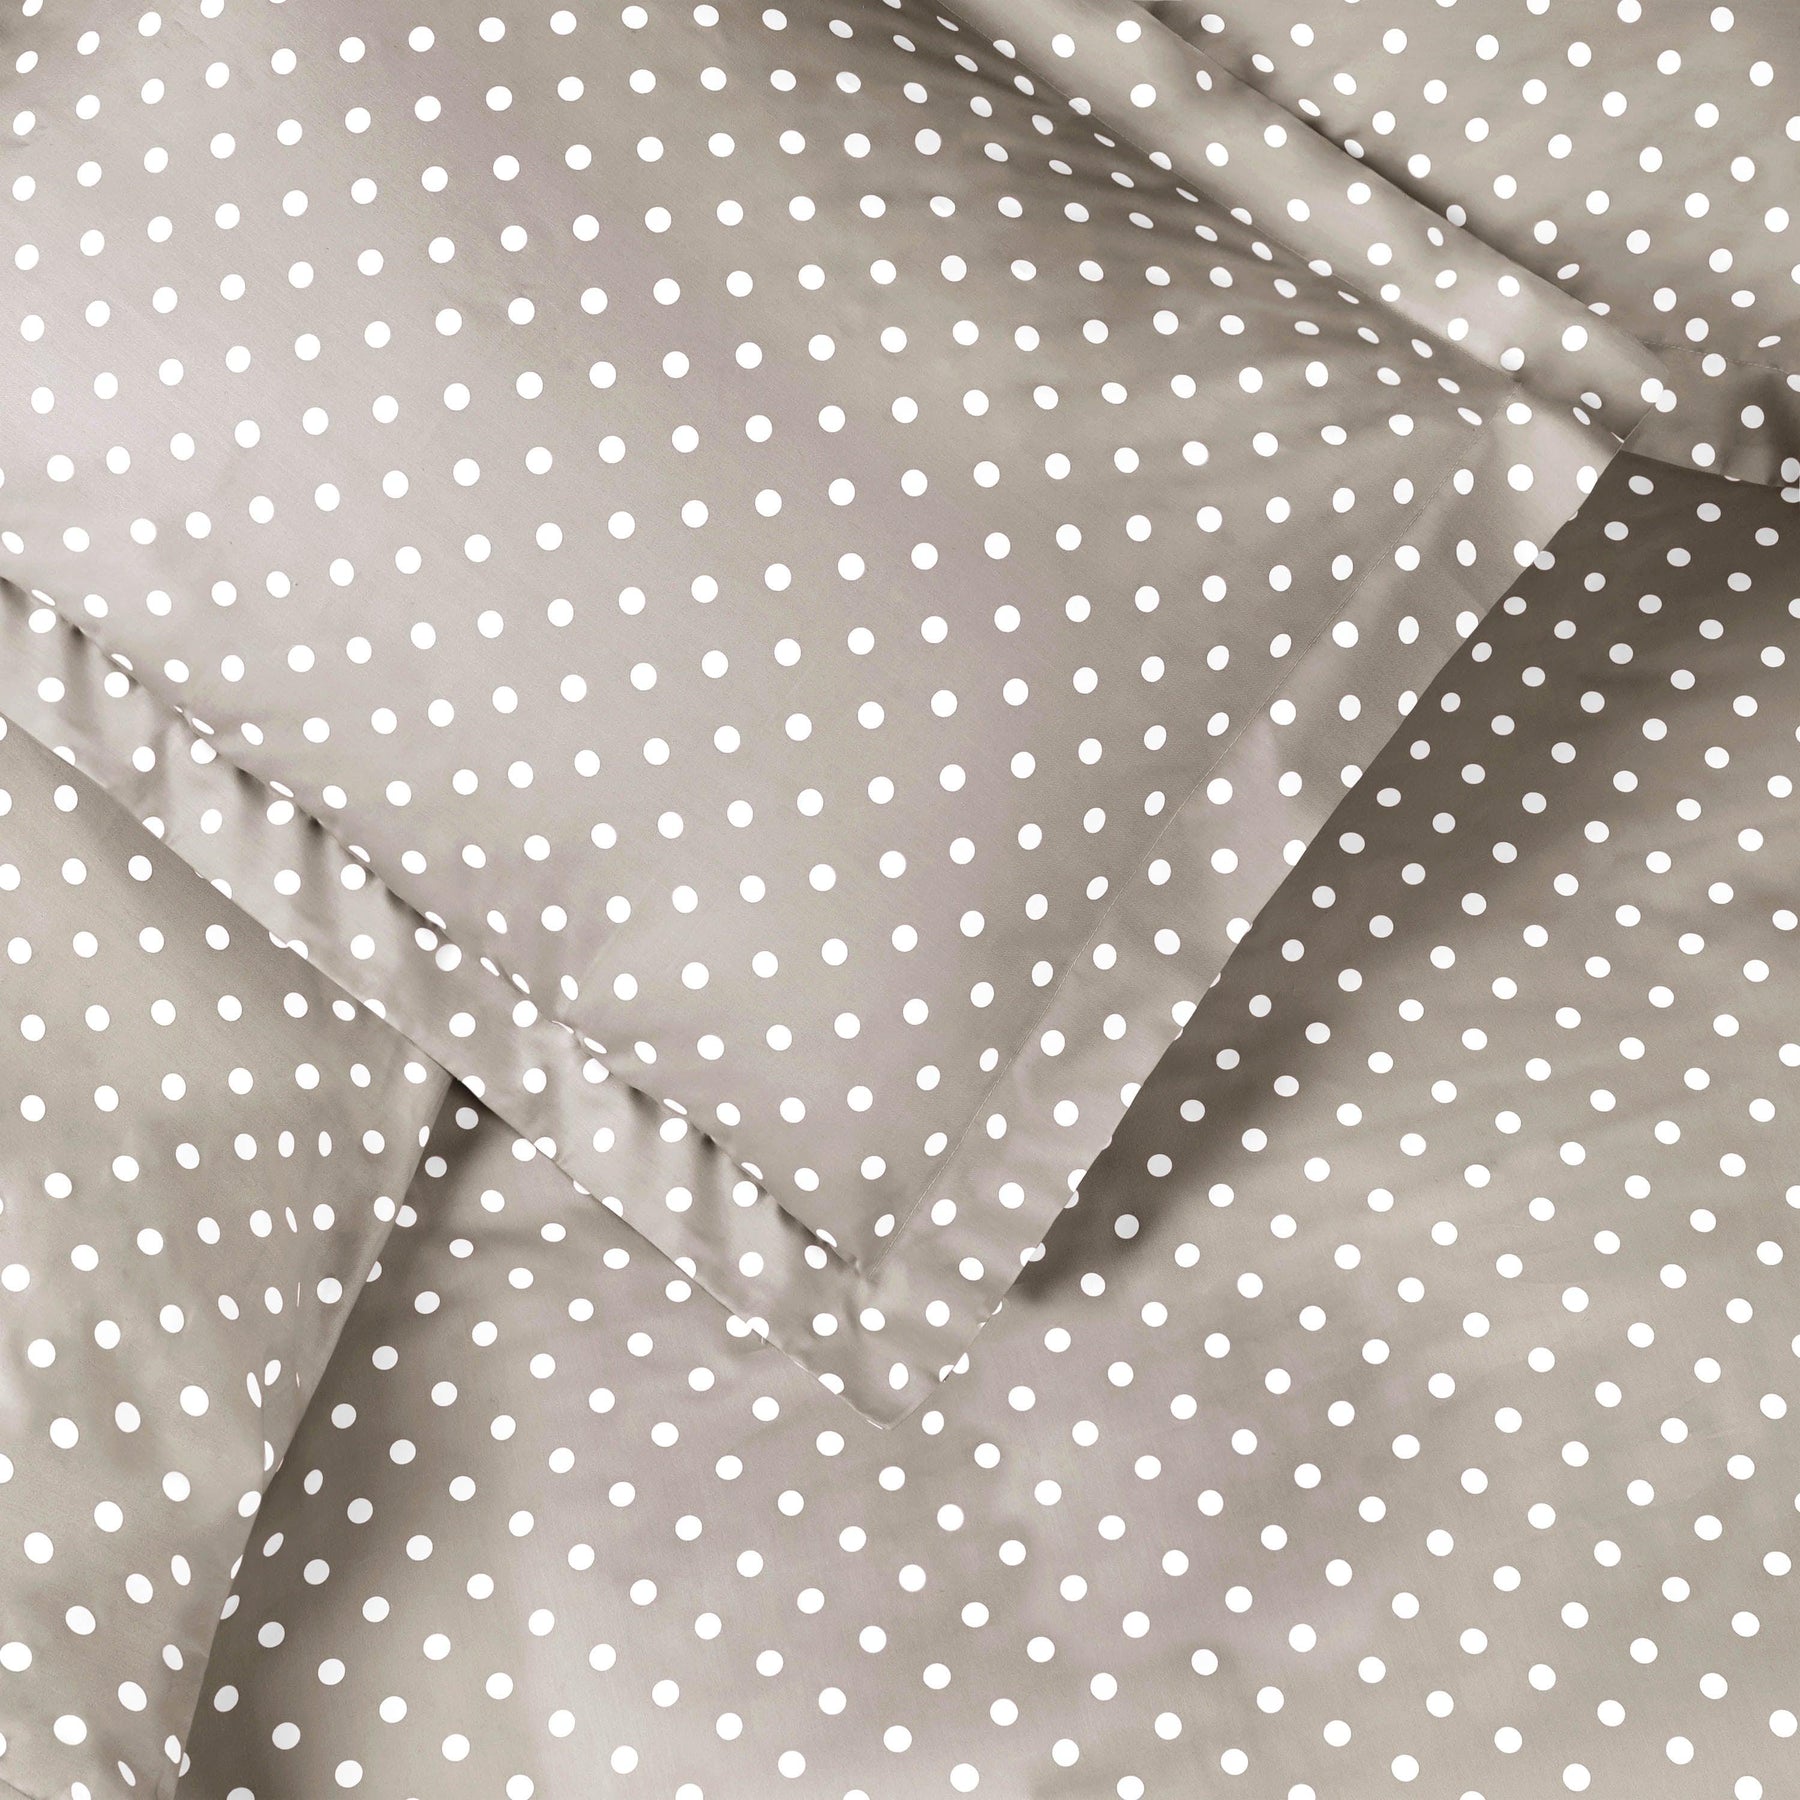 Superior Cotton Blend Polka Dot Luxury Plush Duvet Cover Set - Light Grey